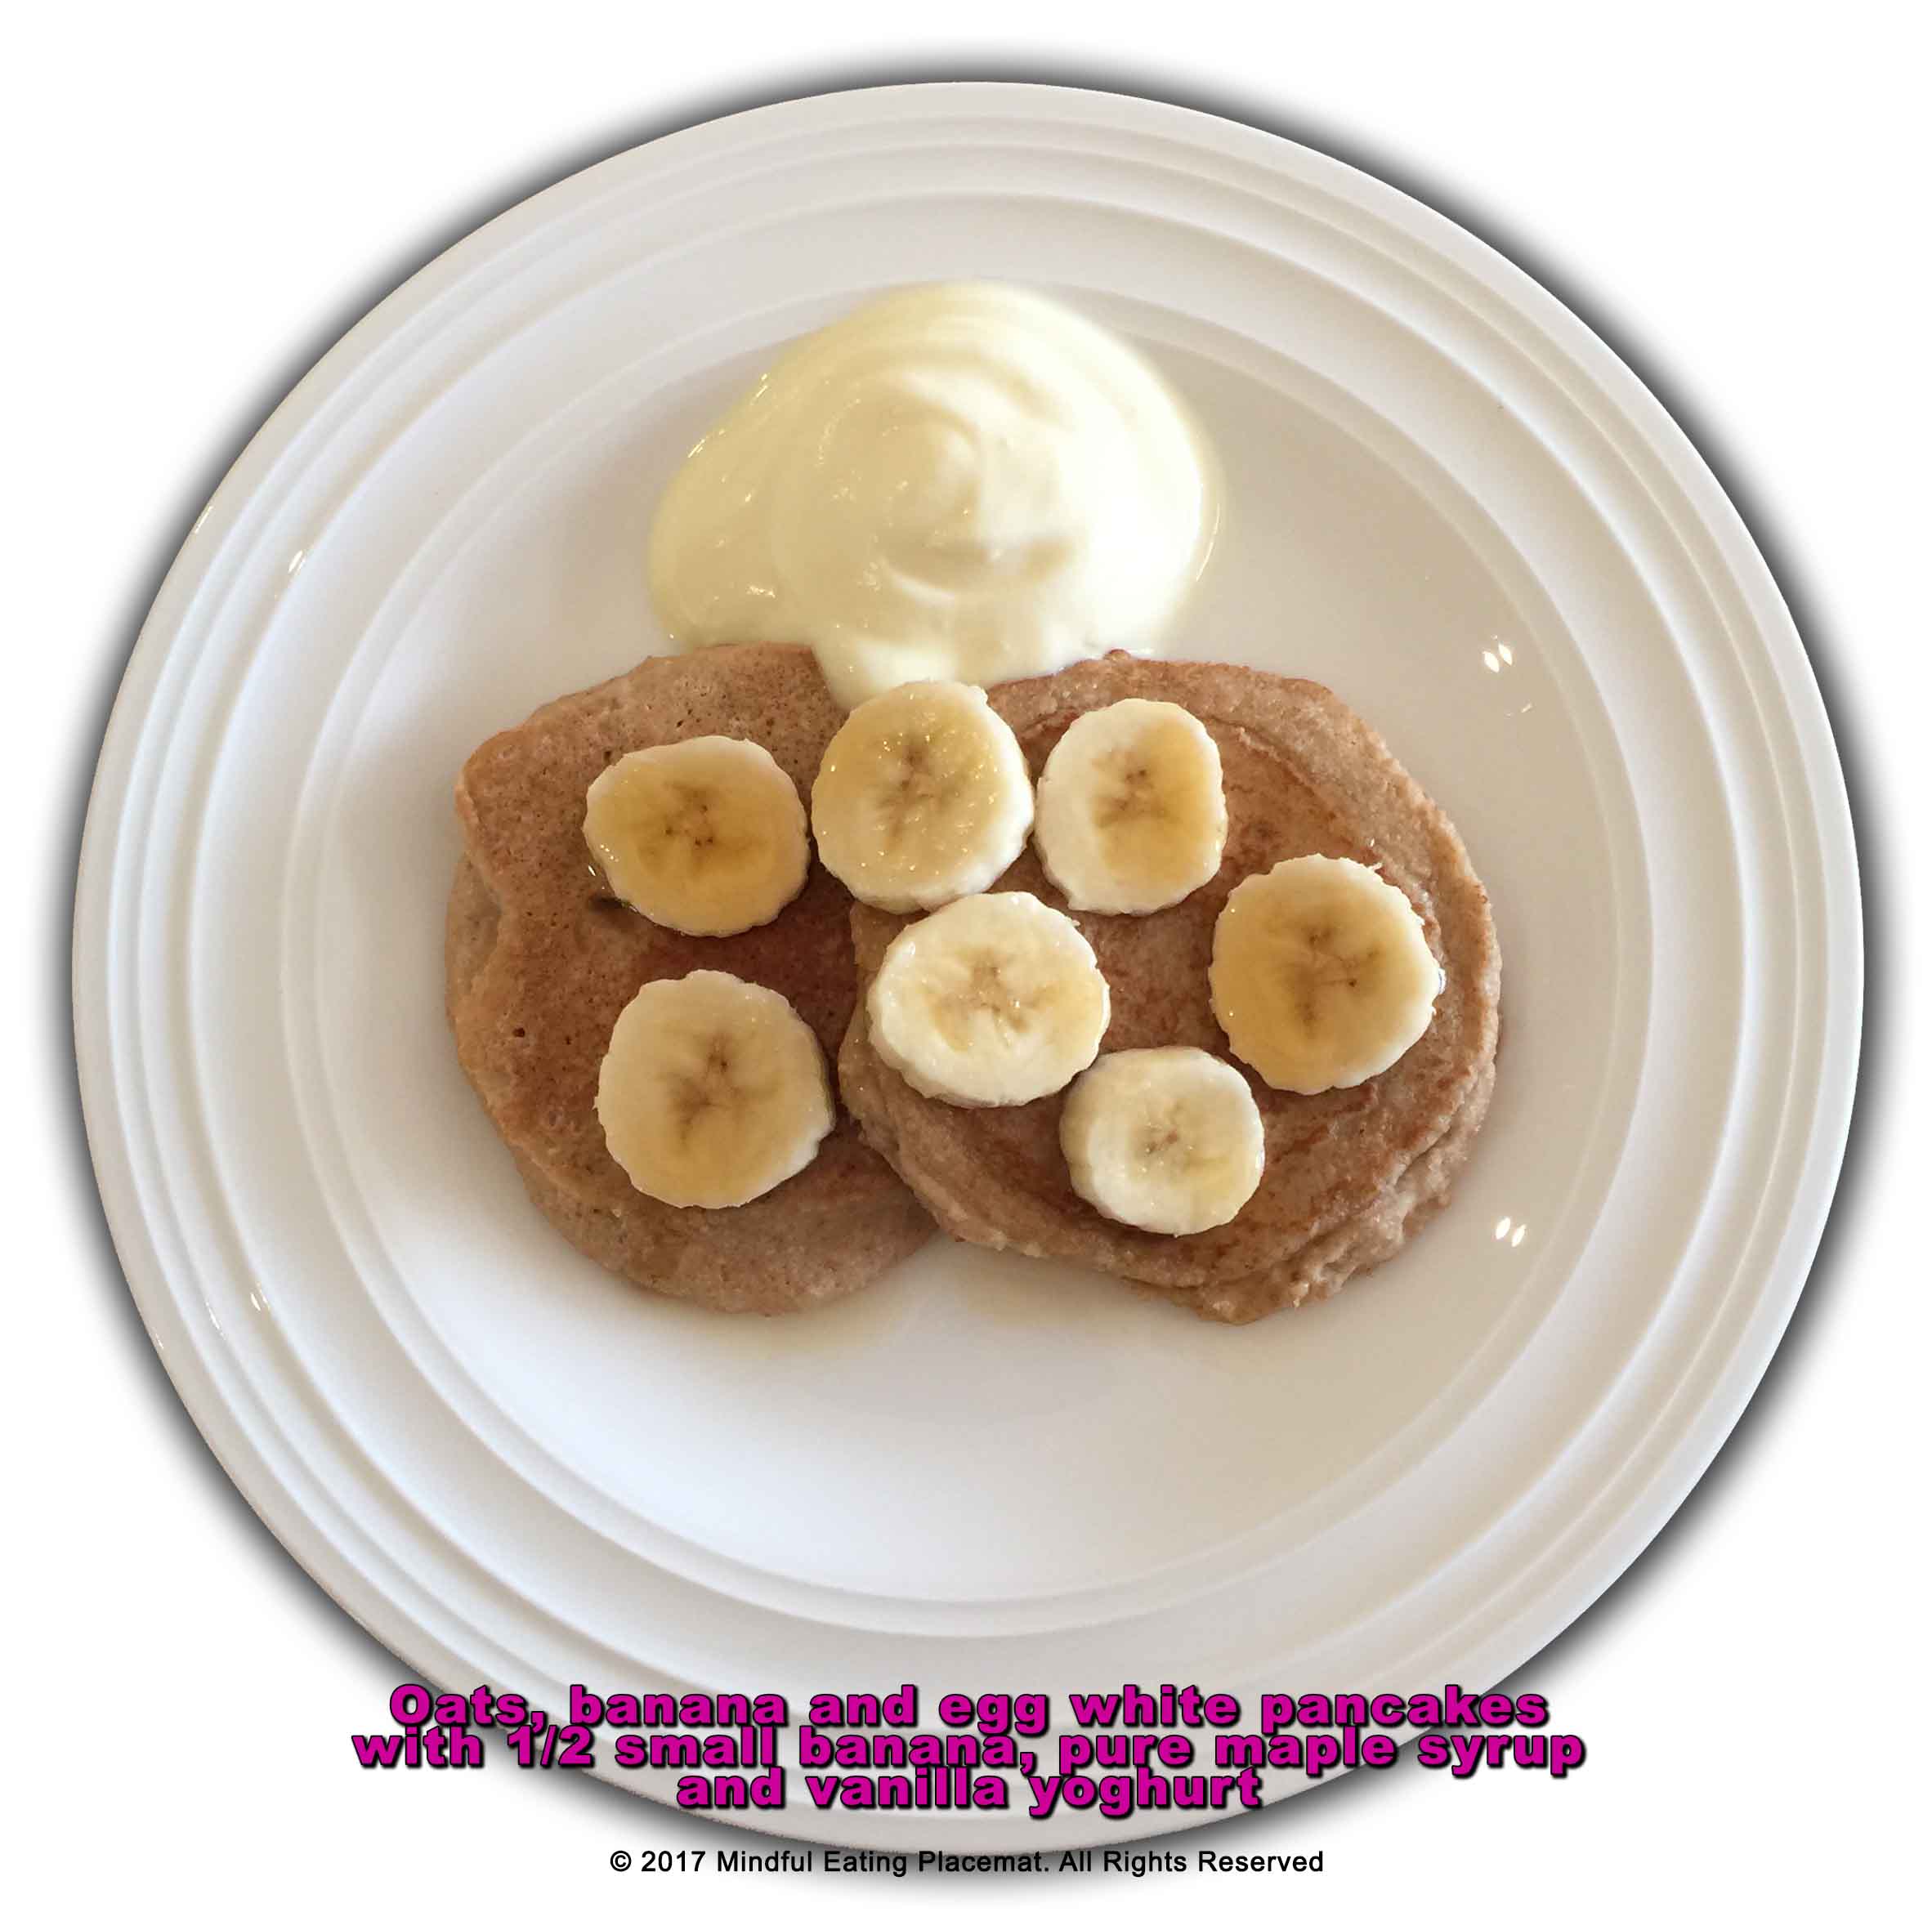 Oats, banana and egg white pancakes with half a small banana, pure maple syrup and vanilla yoghurt